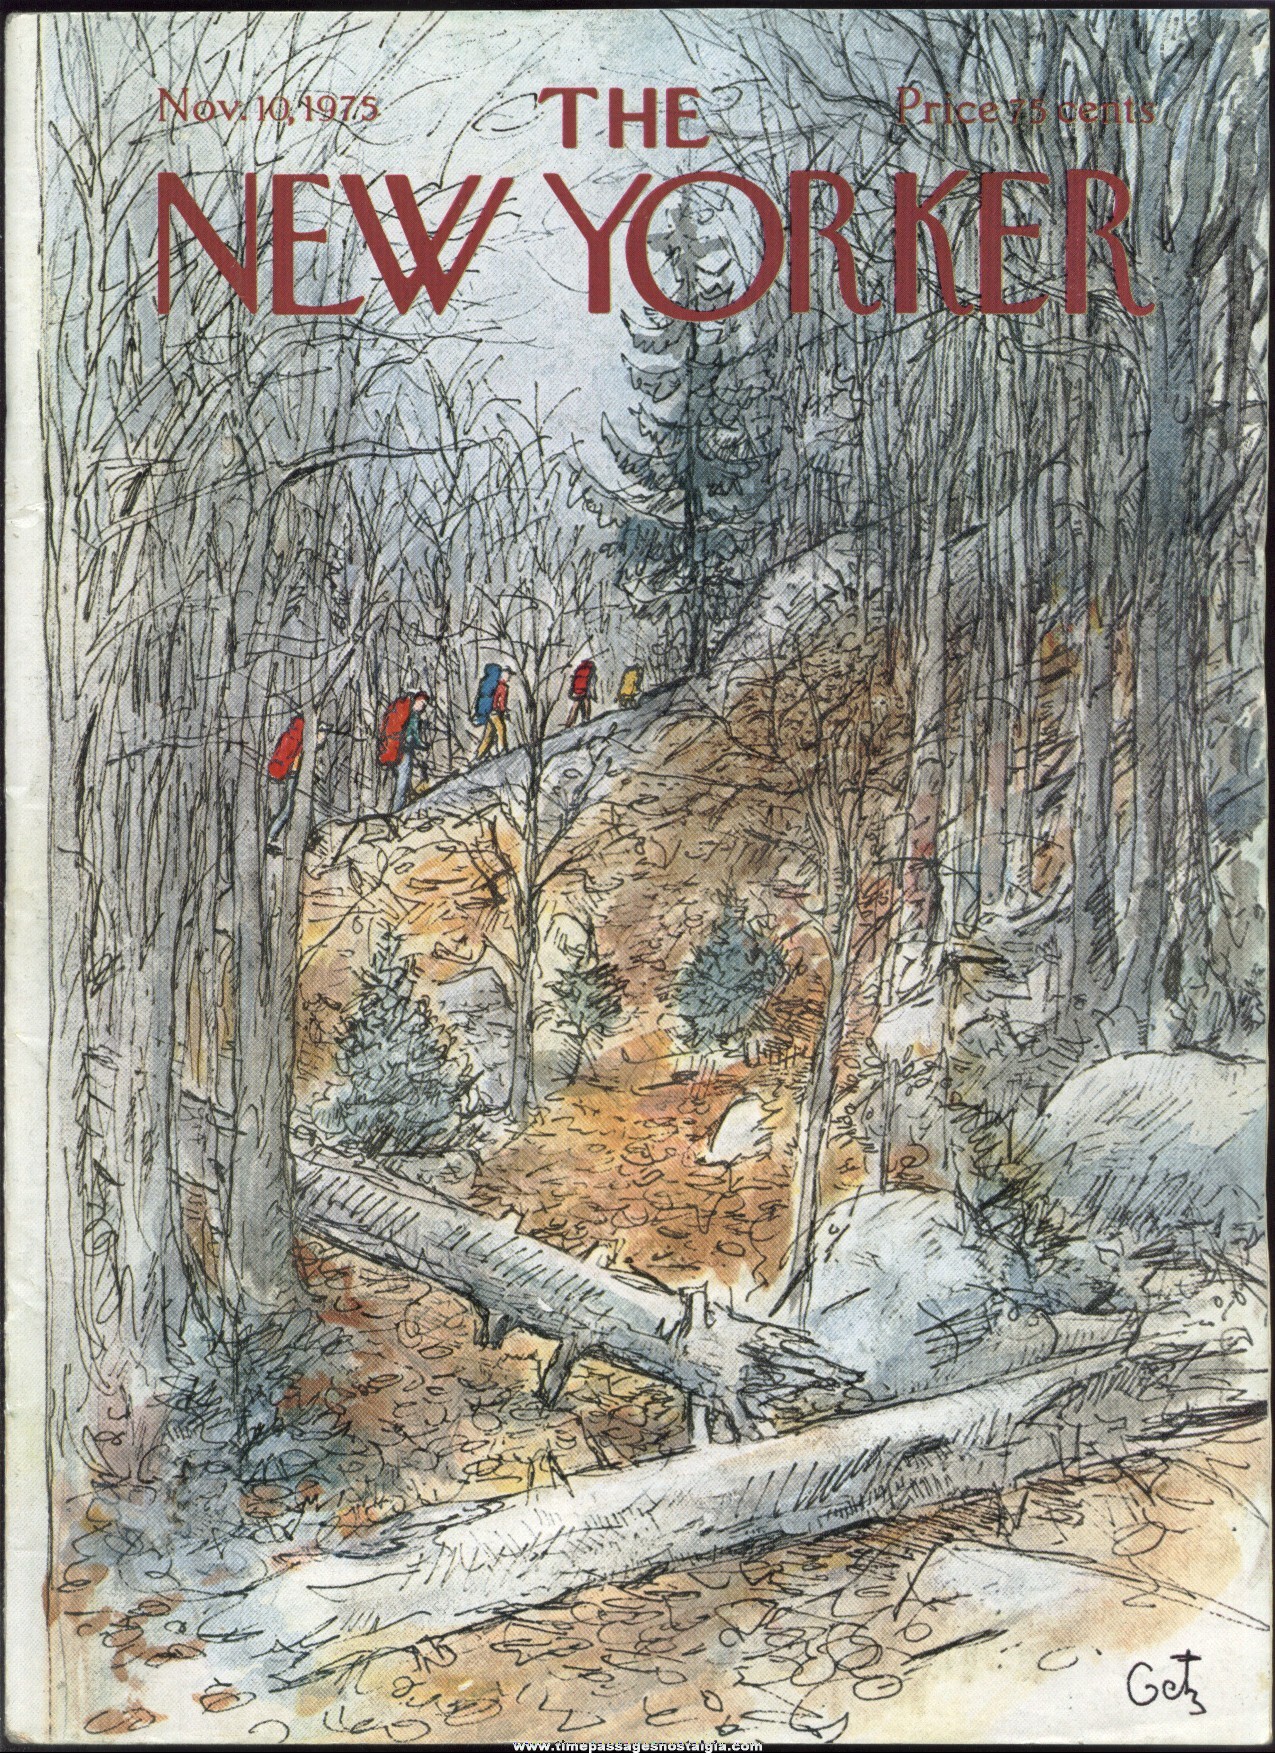 New Yorker Magazine - November 10, 1975 - Cover by Arthur Getz